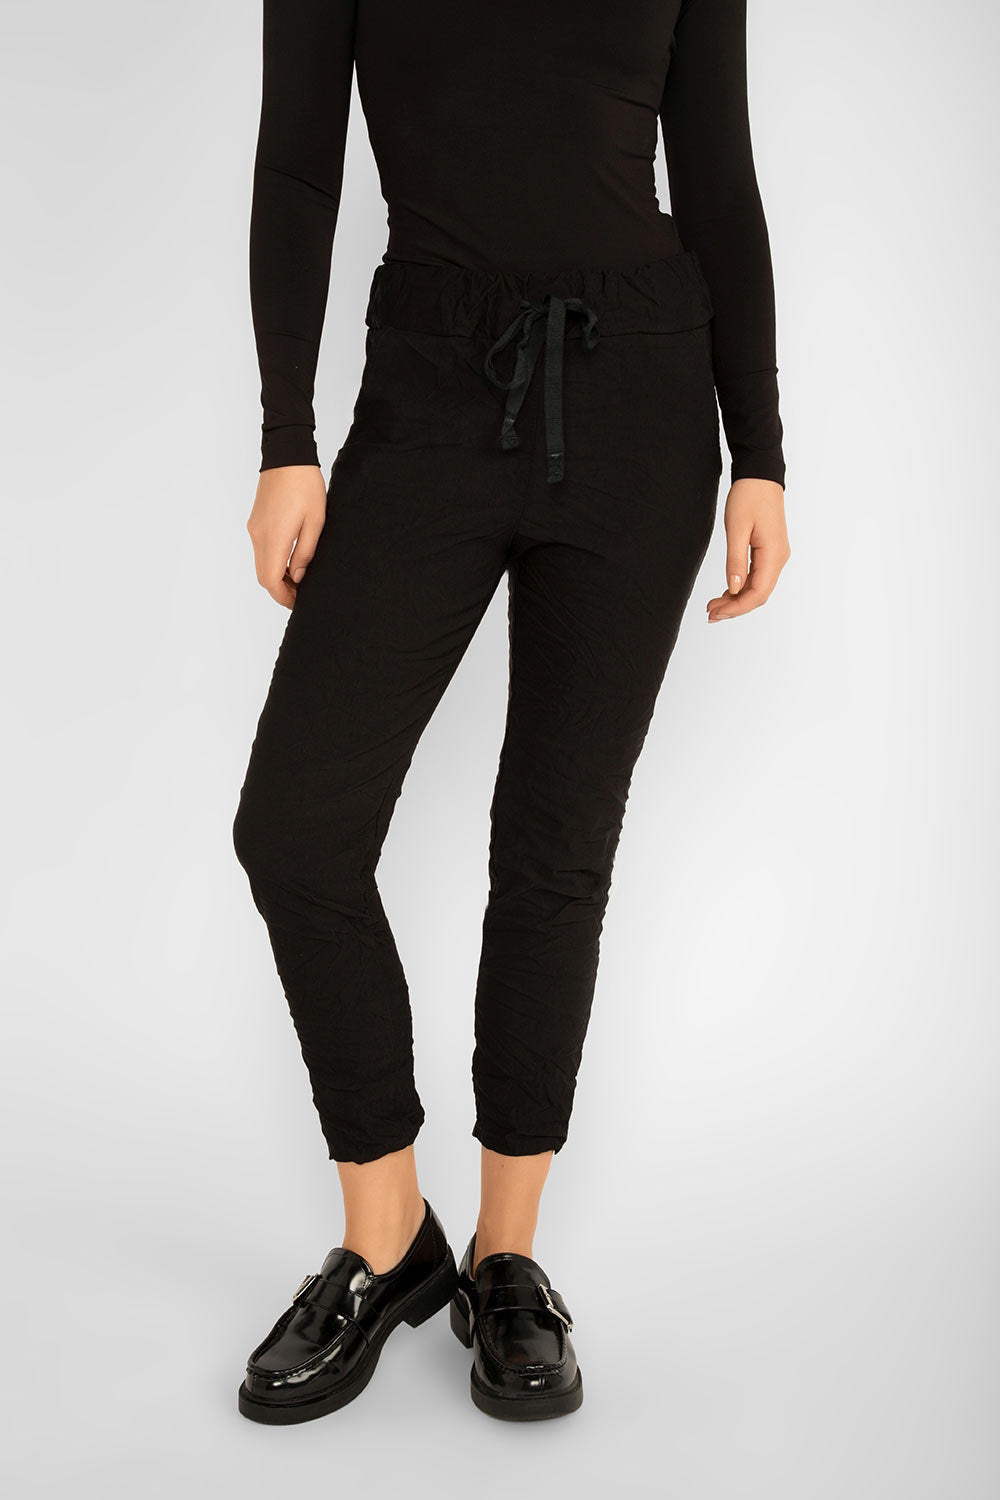 Women's Clothing BELLA AMORE (F17558RS1) Drawstring Capri Pants in BLACK